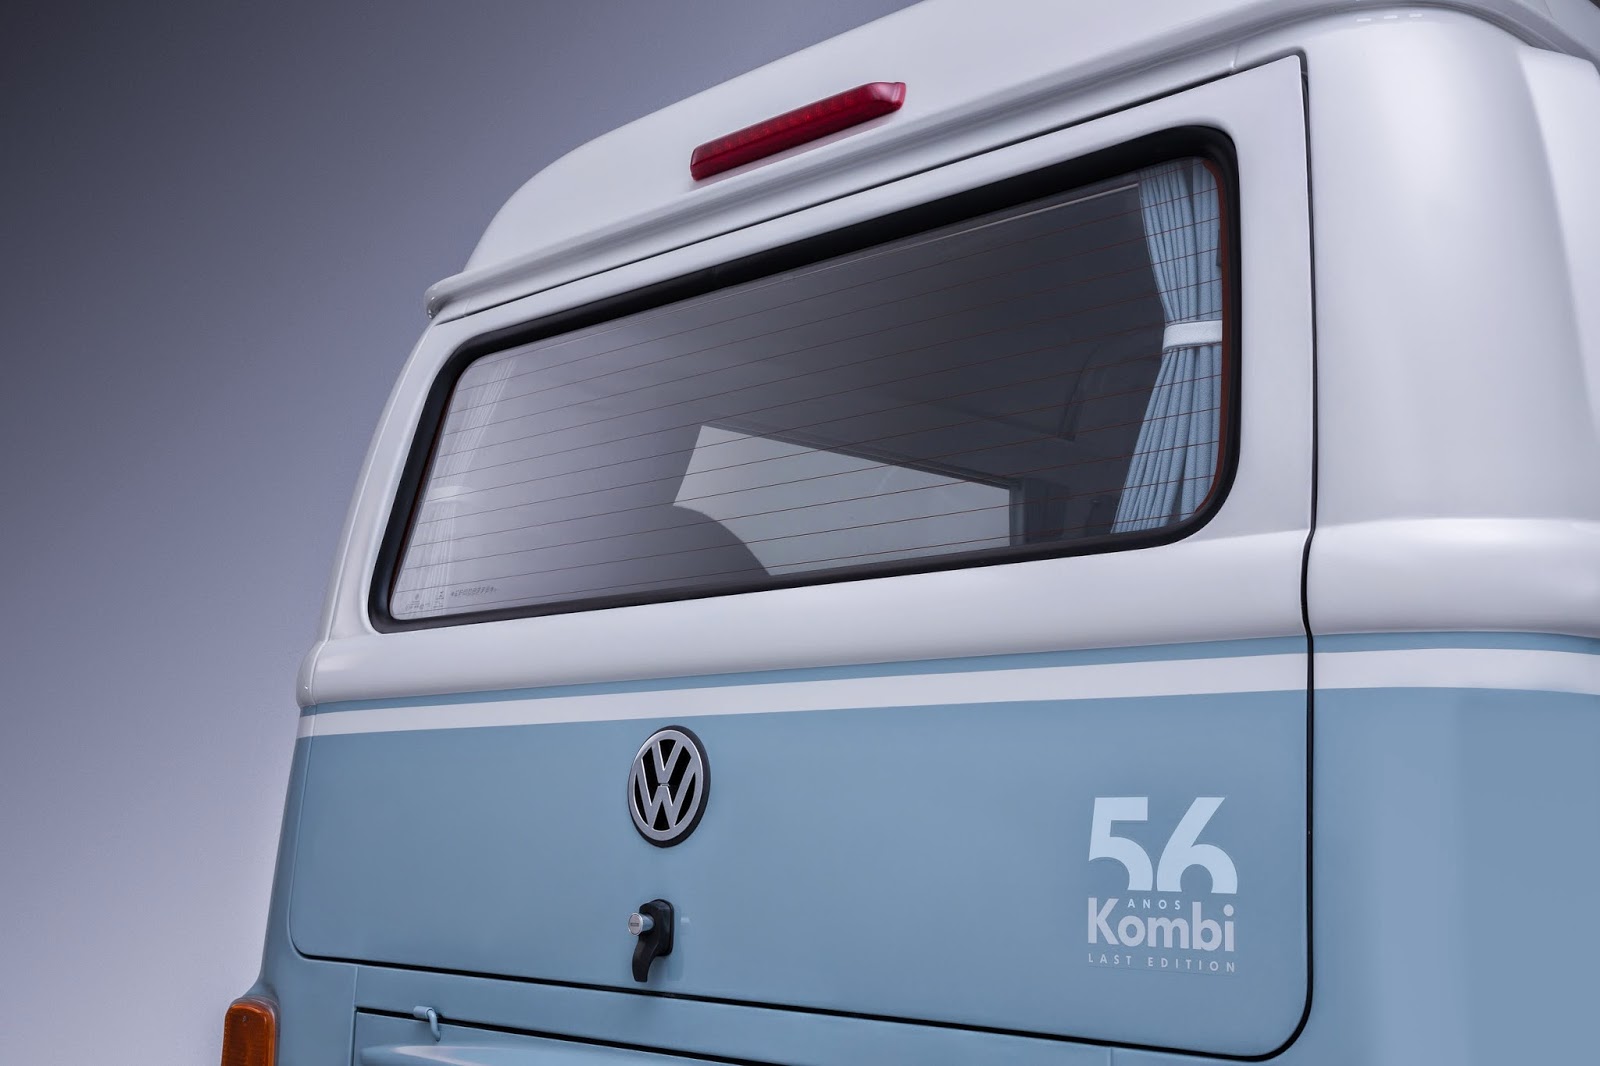 2013-volkswagen-kombi-last-edition-005-1.jpg